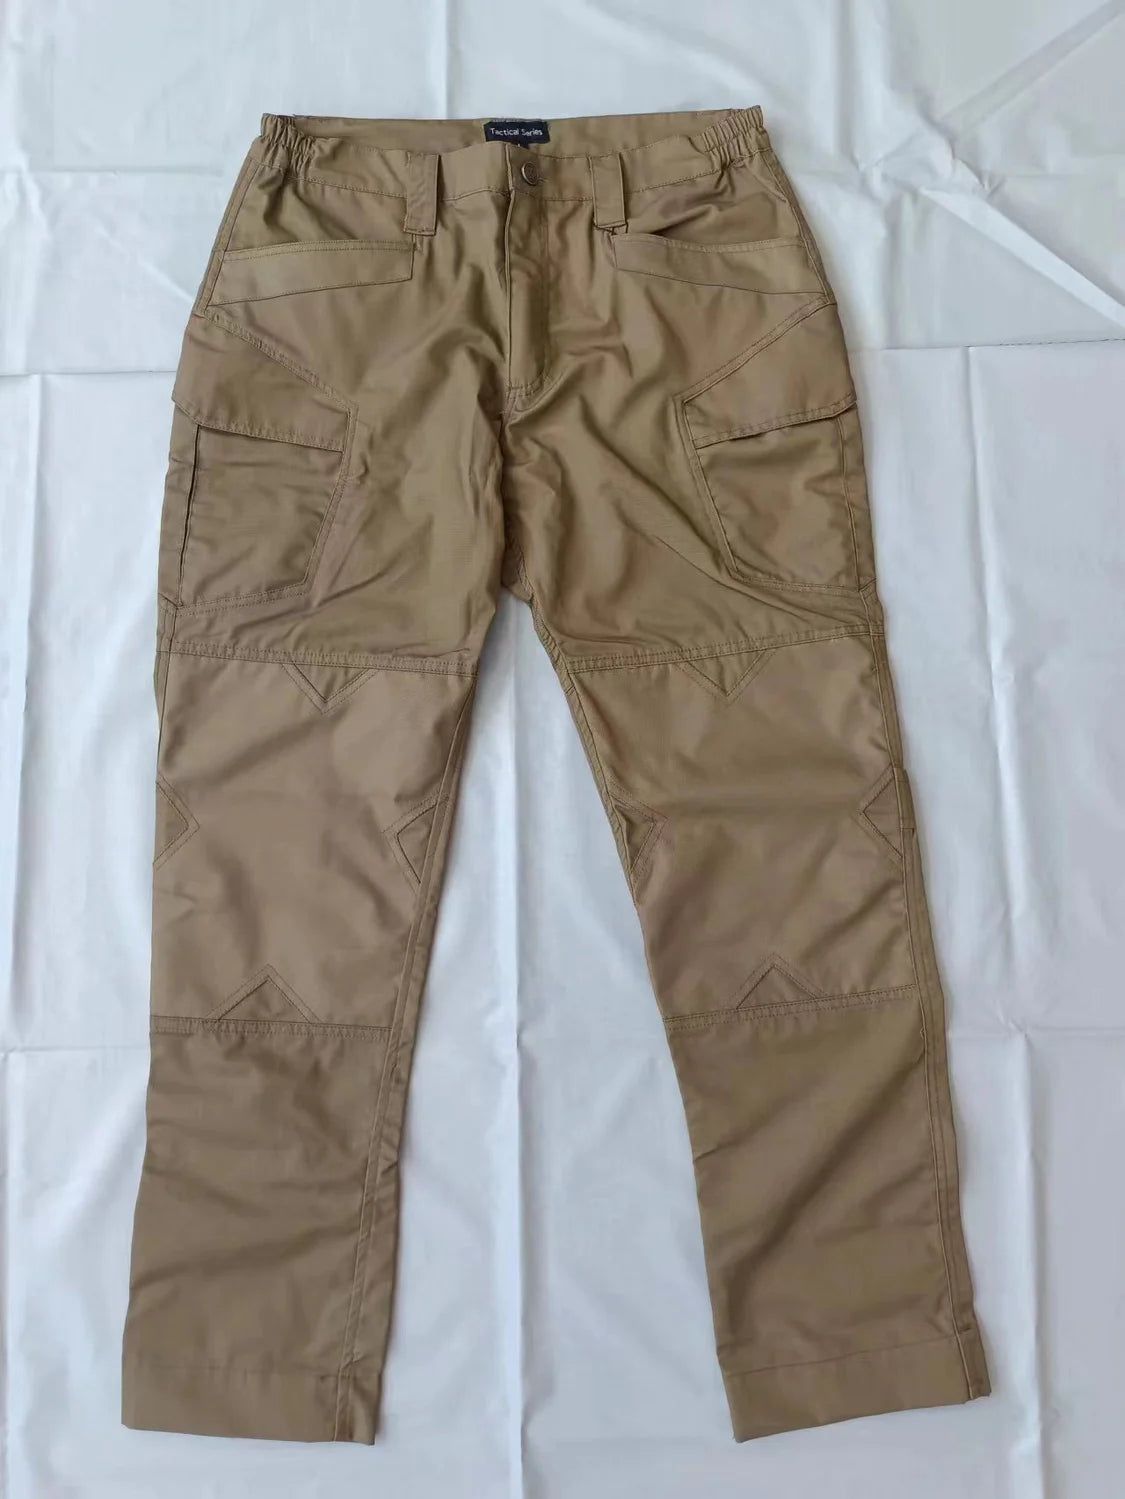 PAVEHAWK Multicam Cargo Pants Men Tactical Pants Cotton Waterproof Camouflage Trousers Army Military Pants Casual Trousers Women